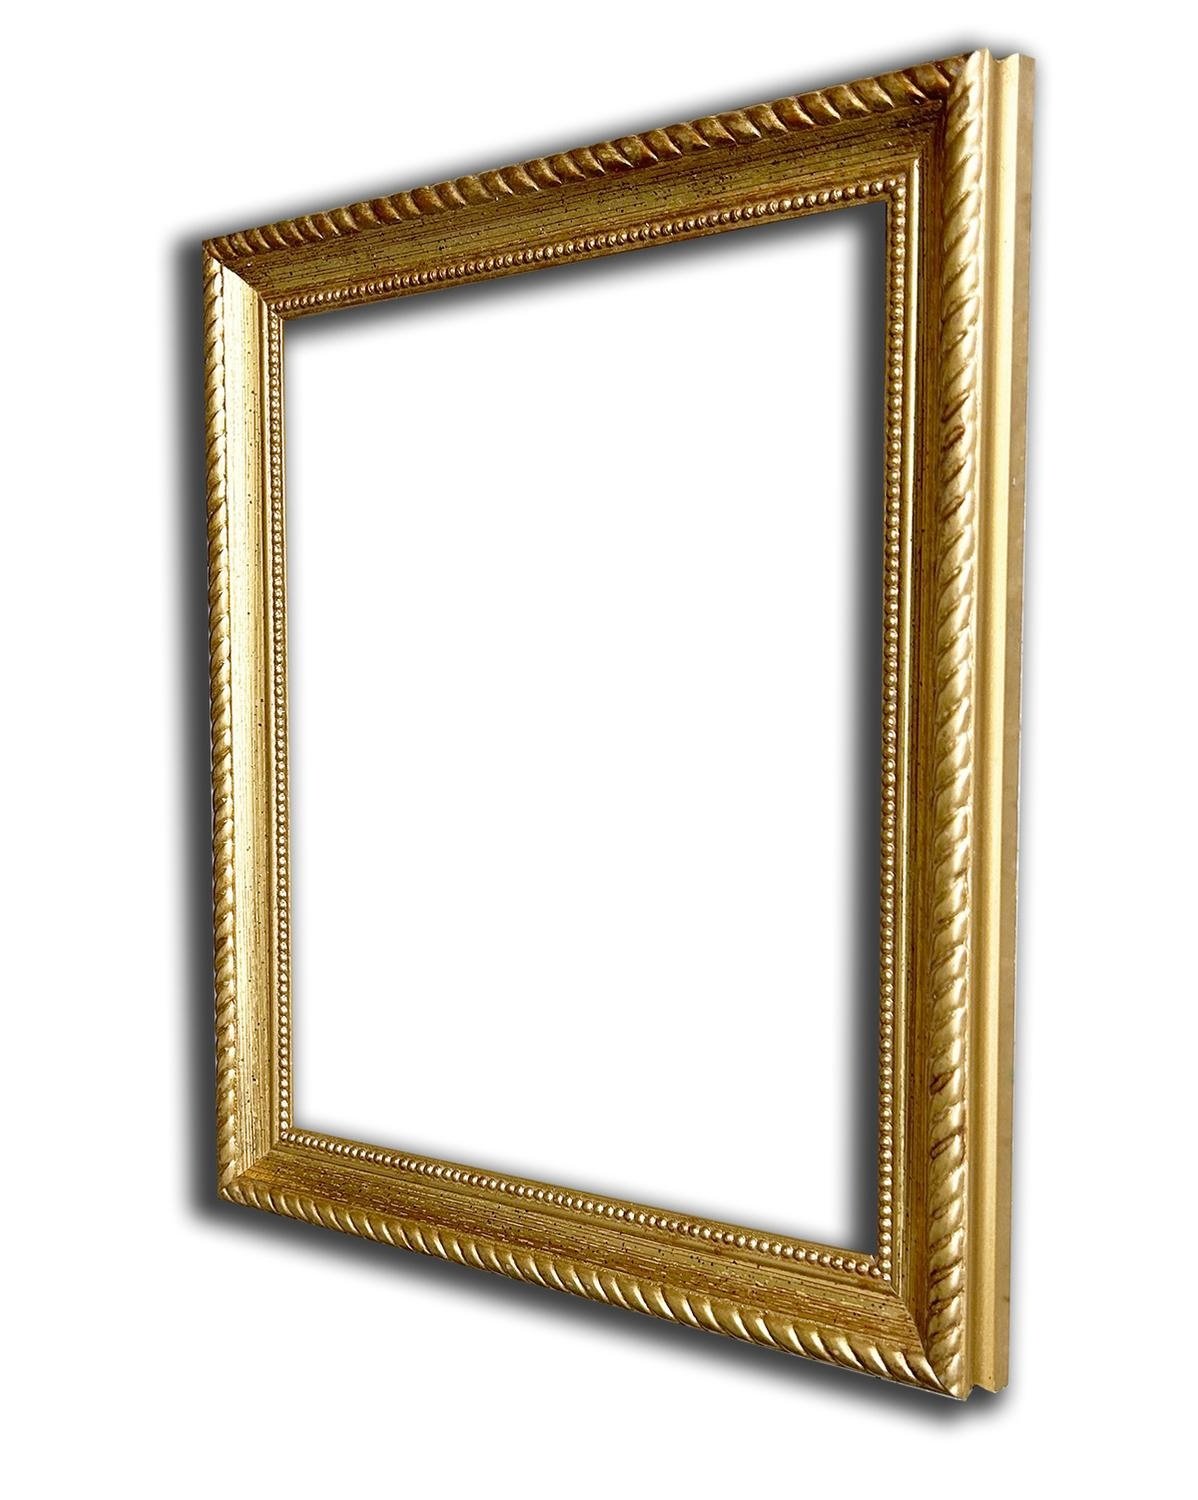 Mirror 13x18 cm or 5x7 ins, whole size 18x23 cm